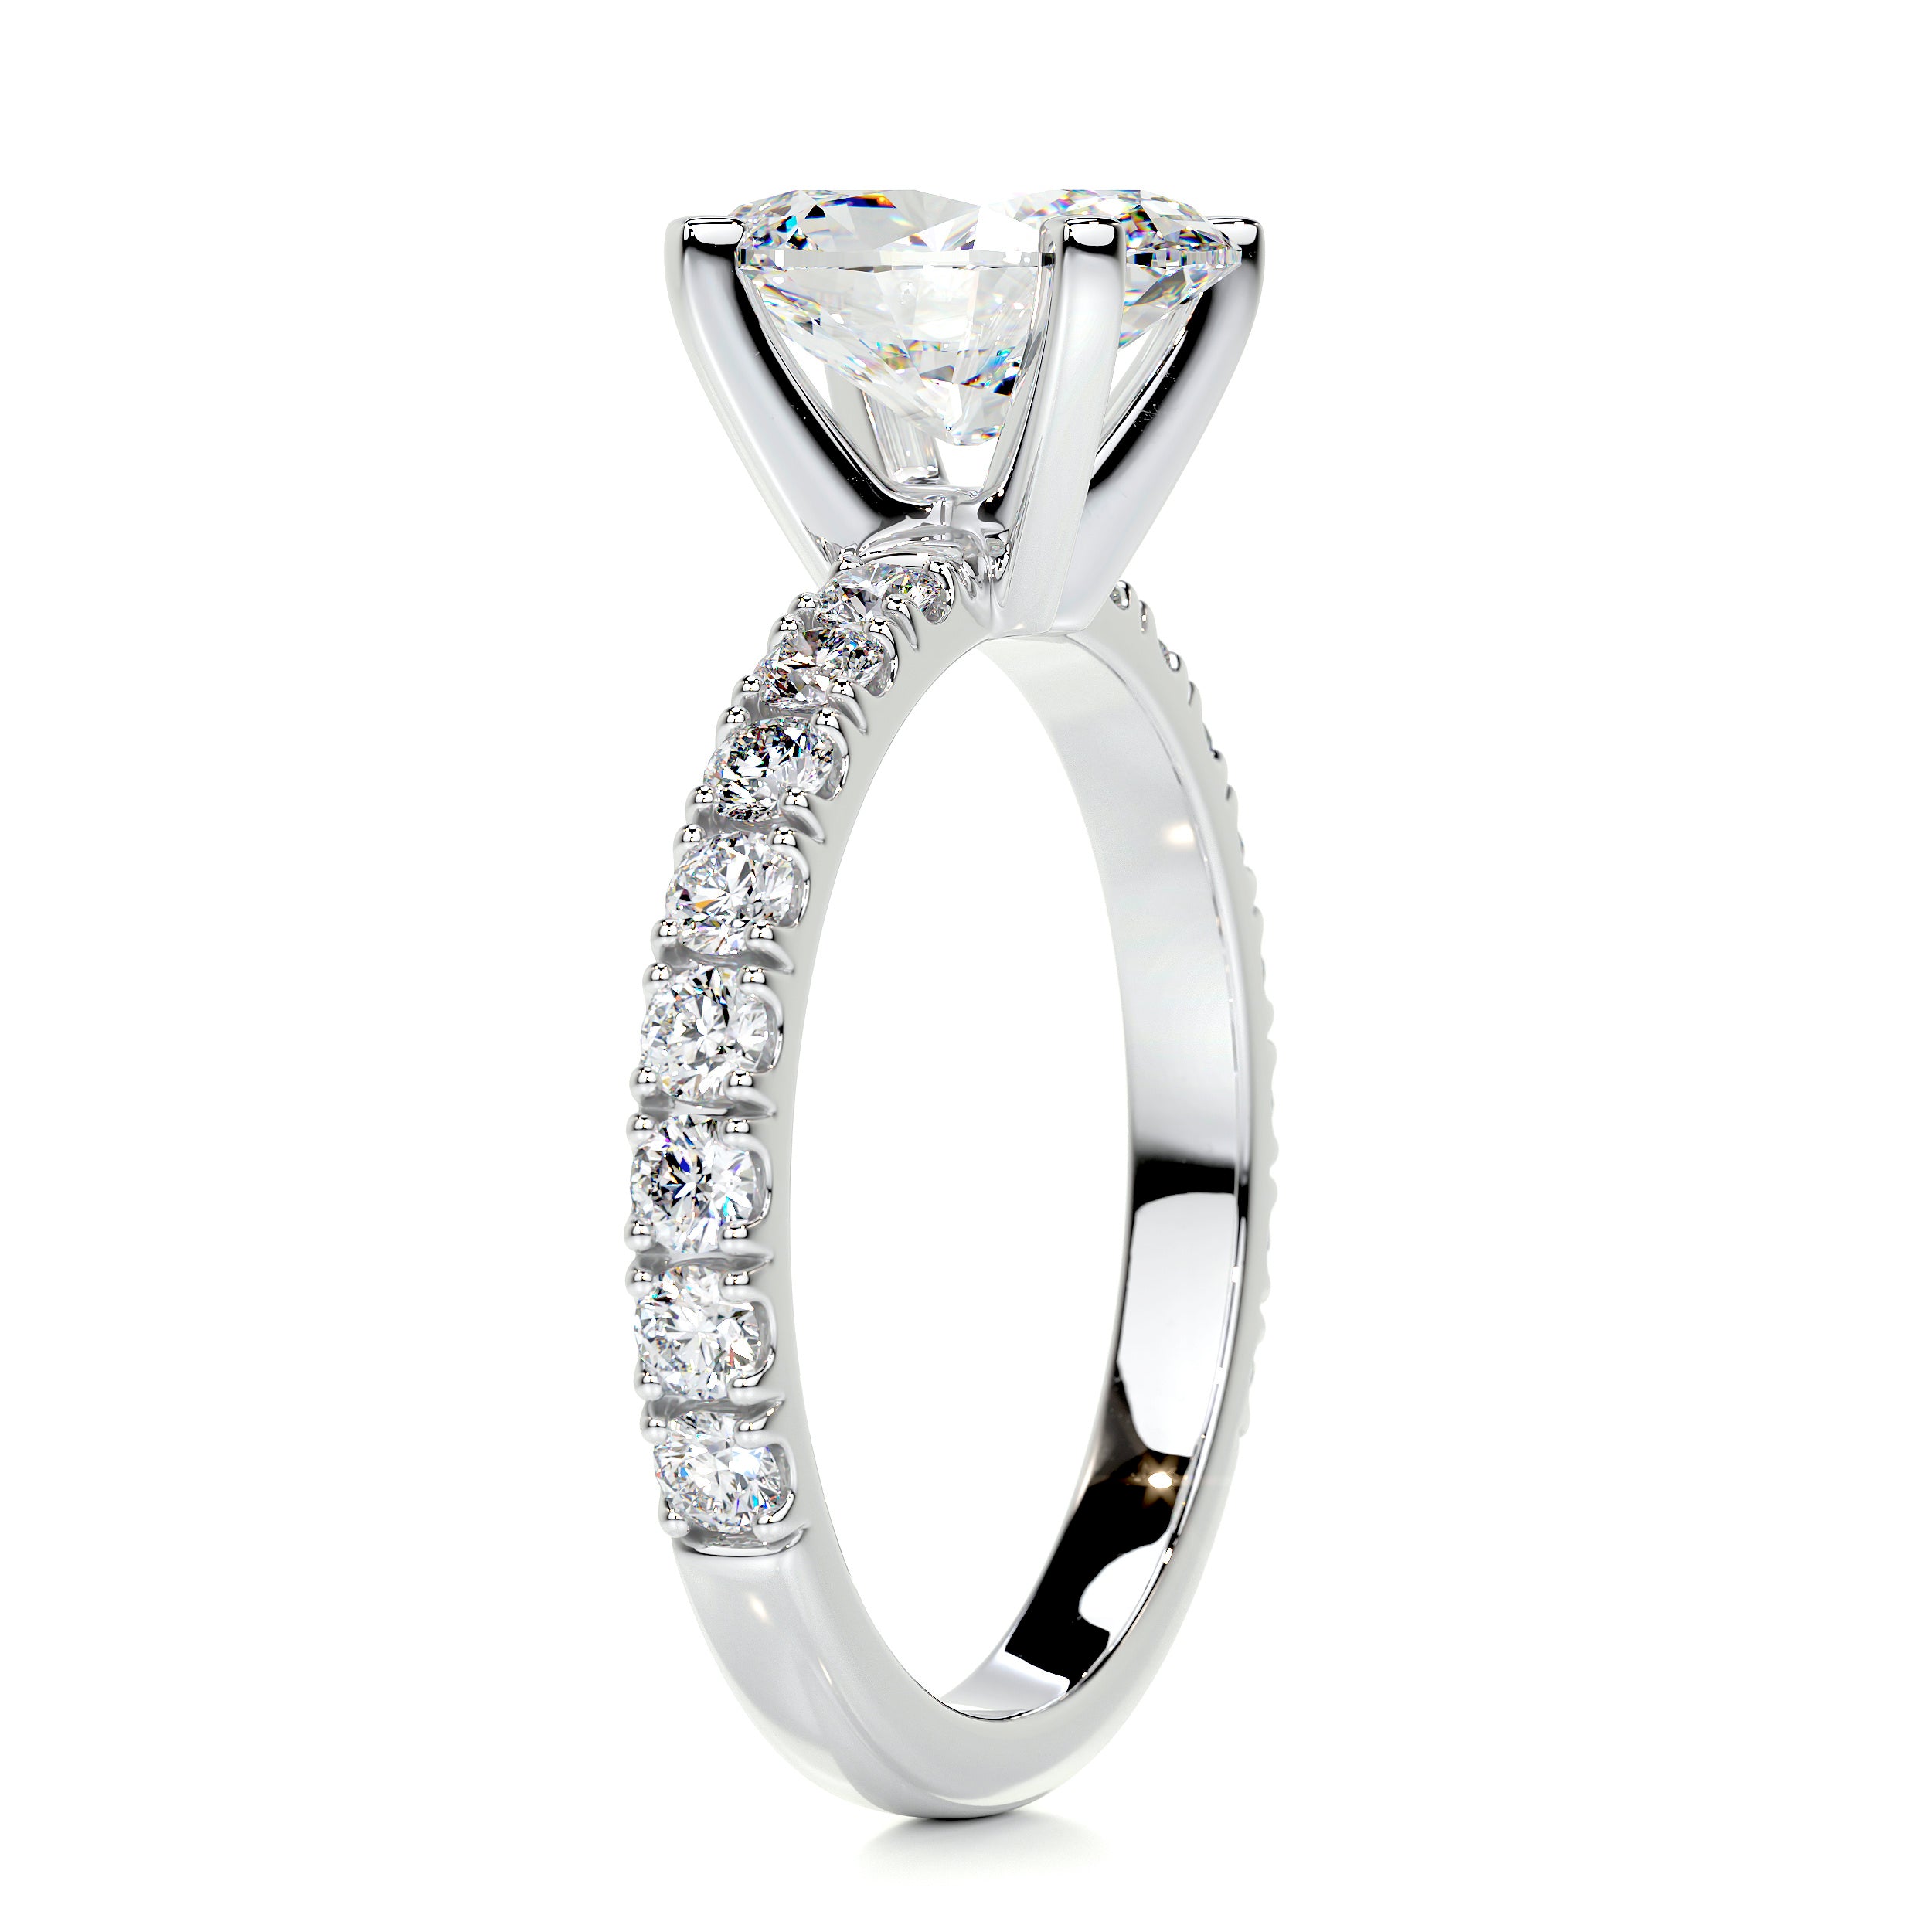 Alison Moissanite & Diamonds Ring   (2.65 Carat) -14K White Gold